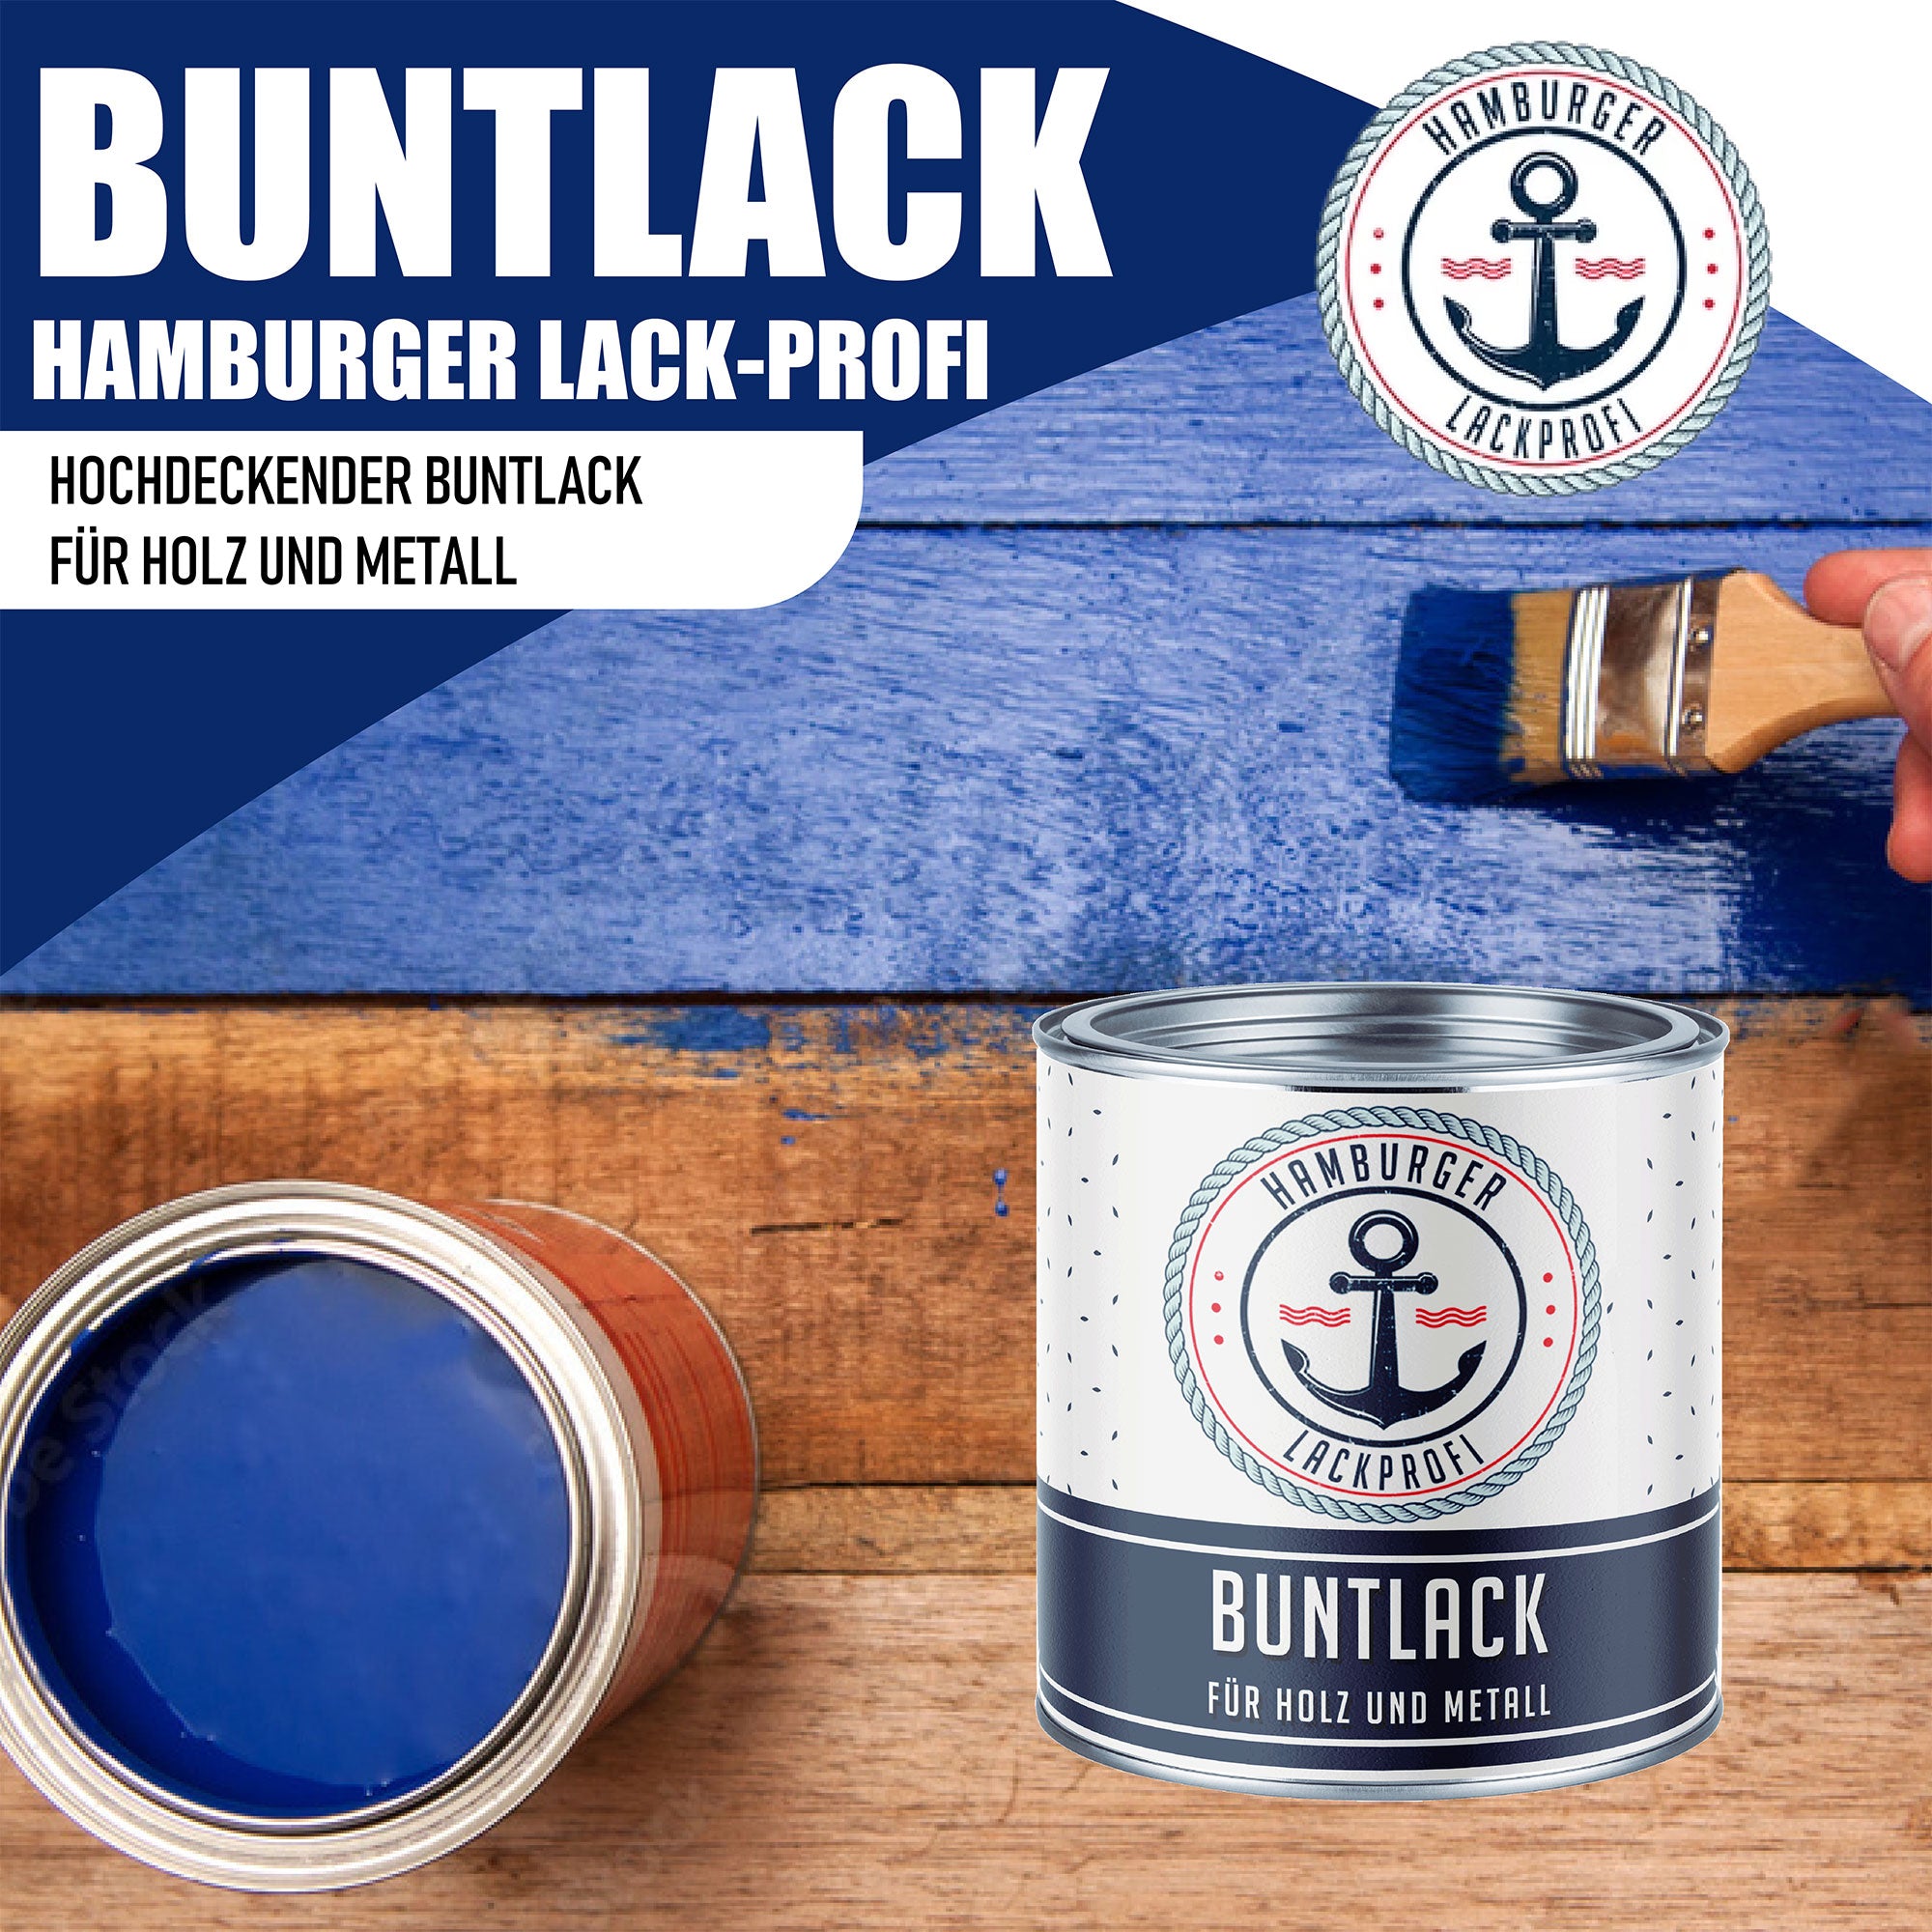 Hamburger Lack-Profi Buntlack Maisgelb RAL 1006 - Robuster Kunstharzlack - Hamburger Lack-Profi